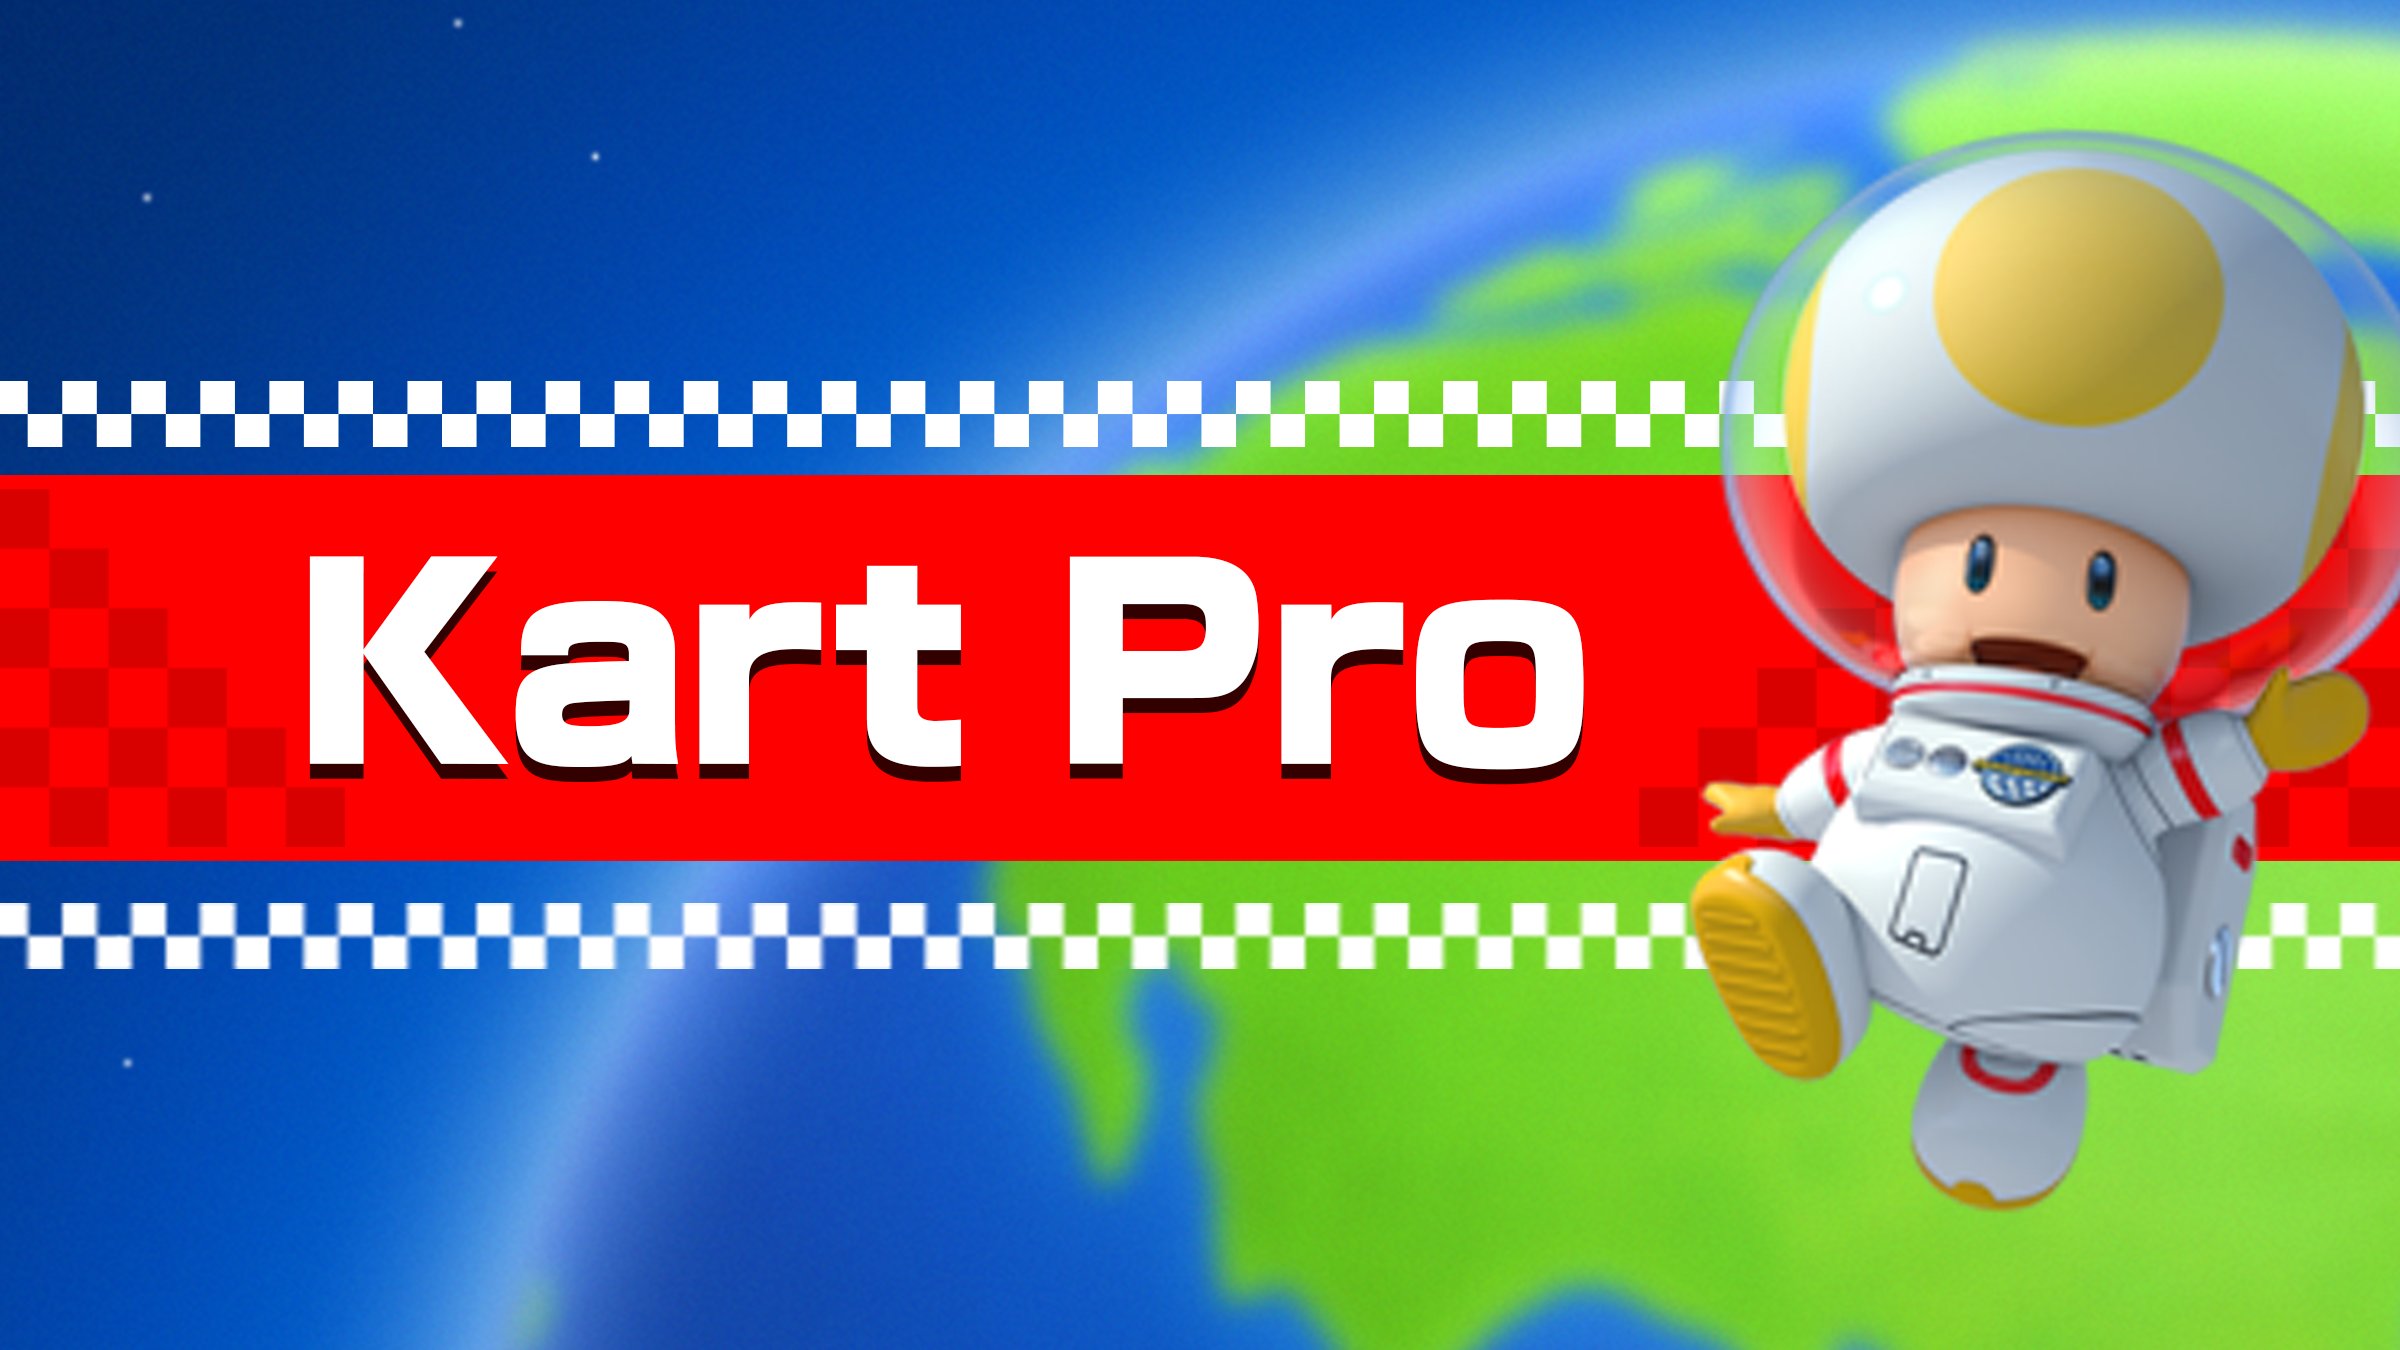 Mario Kart Tour Kart Pro event set to reward first-place finishes